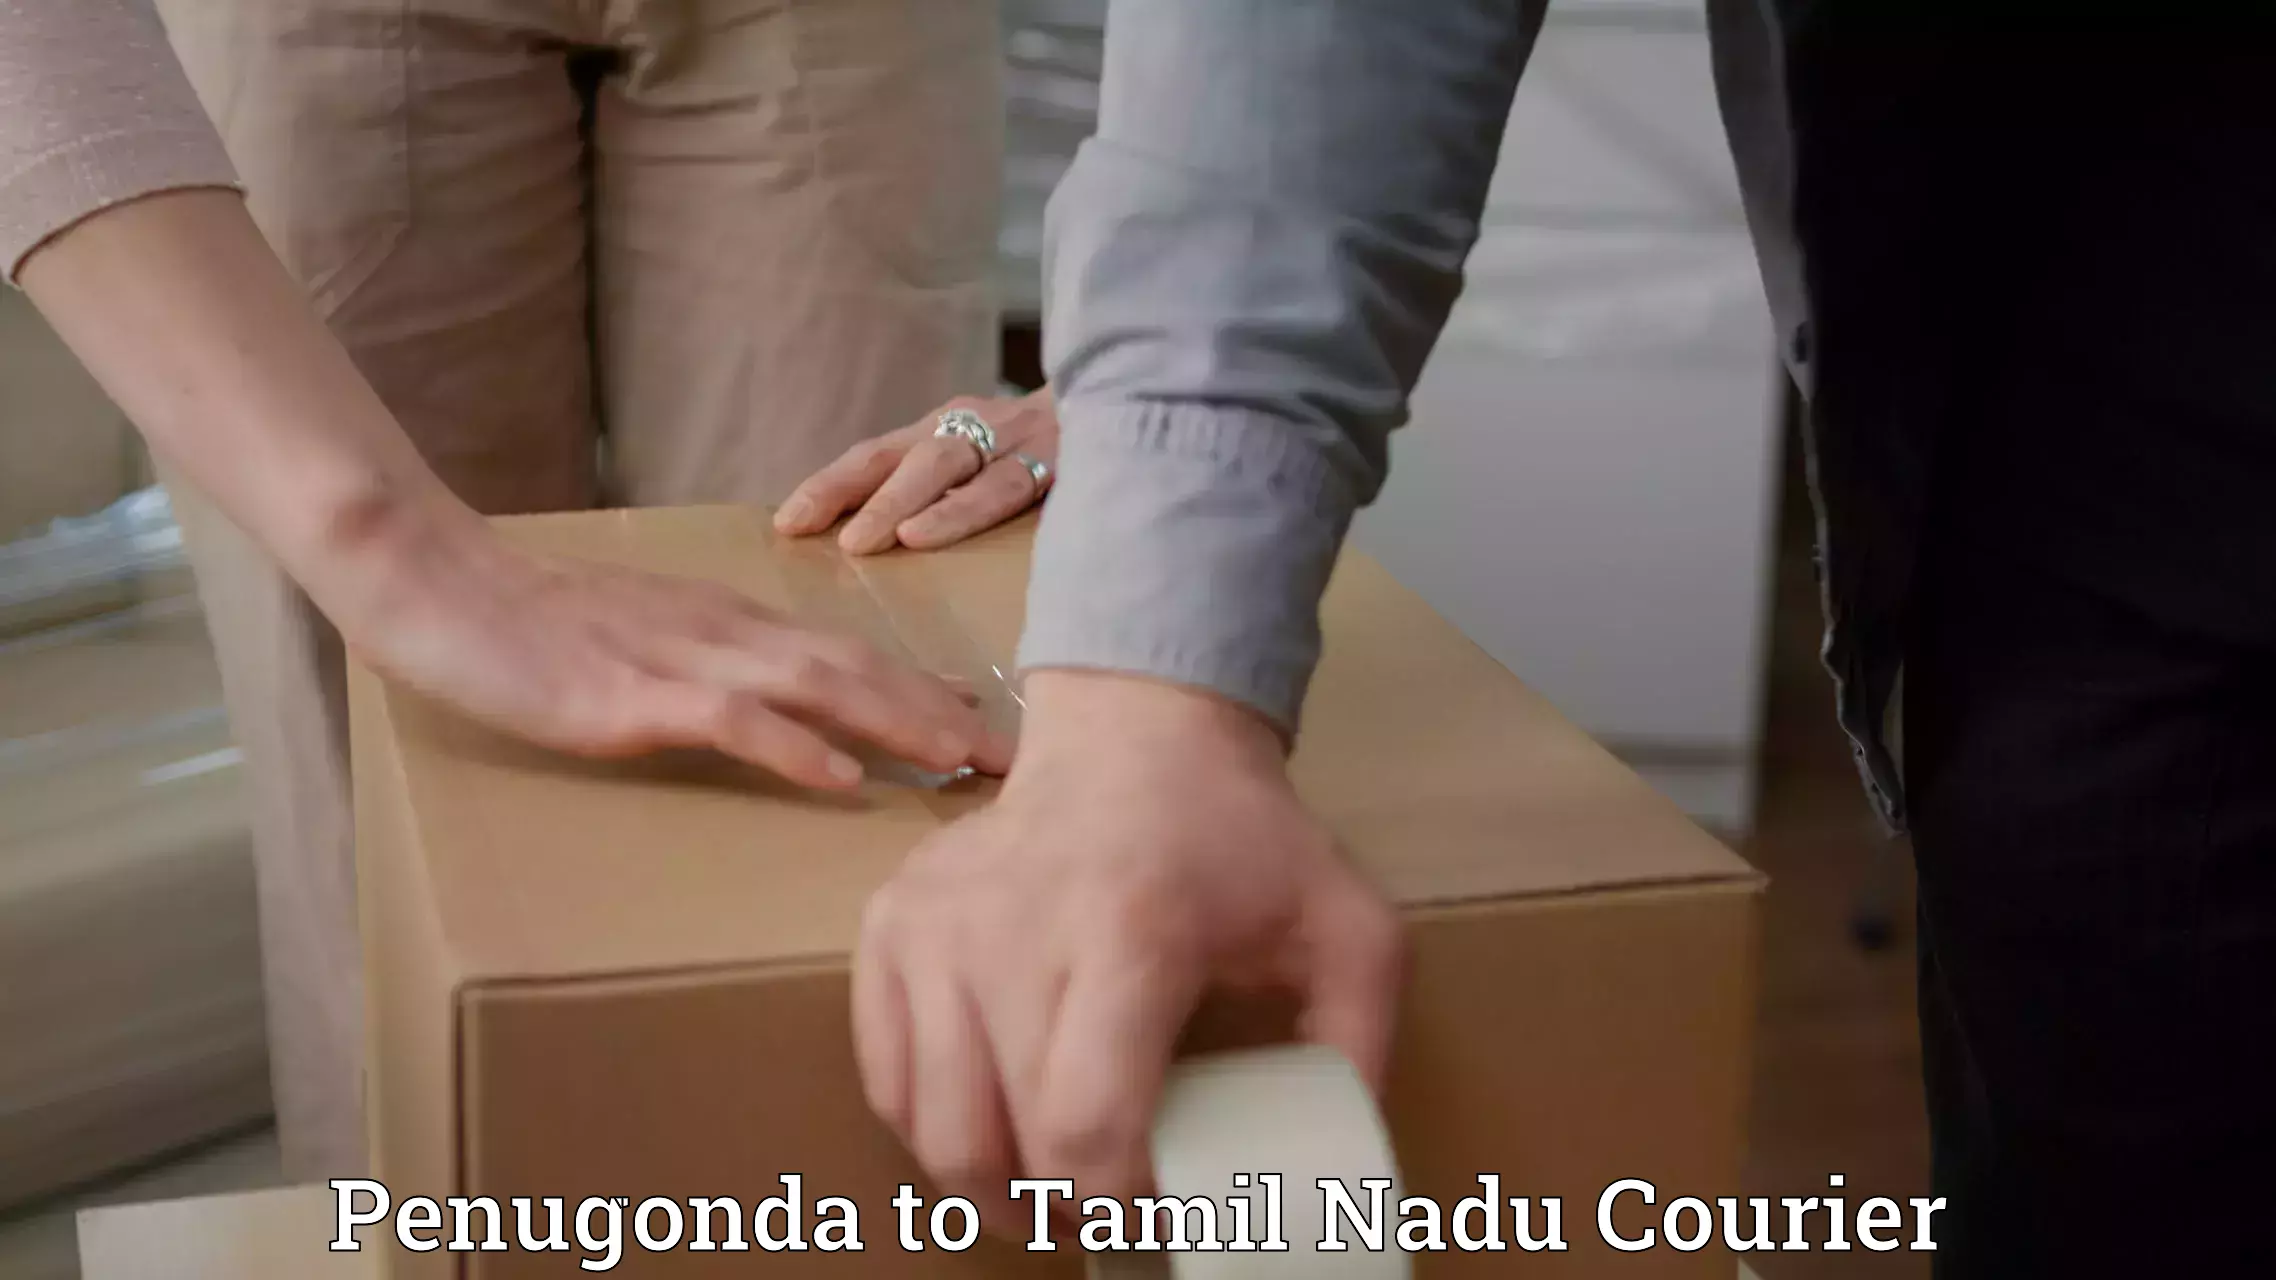 Professional courier handling Penugonda to Tamil Nadu